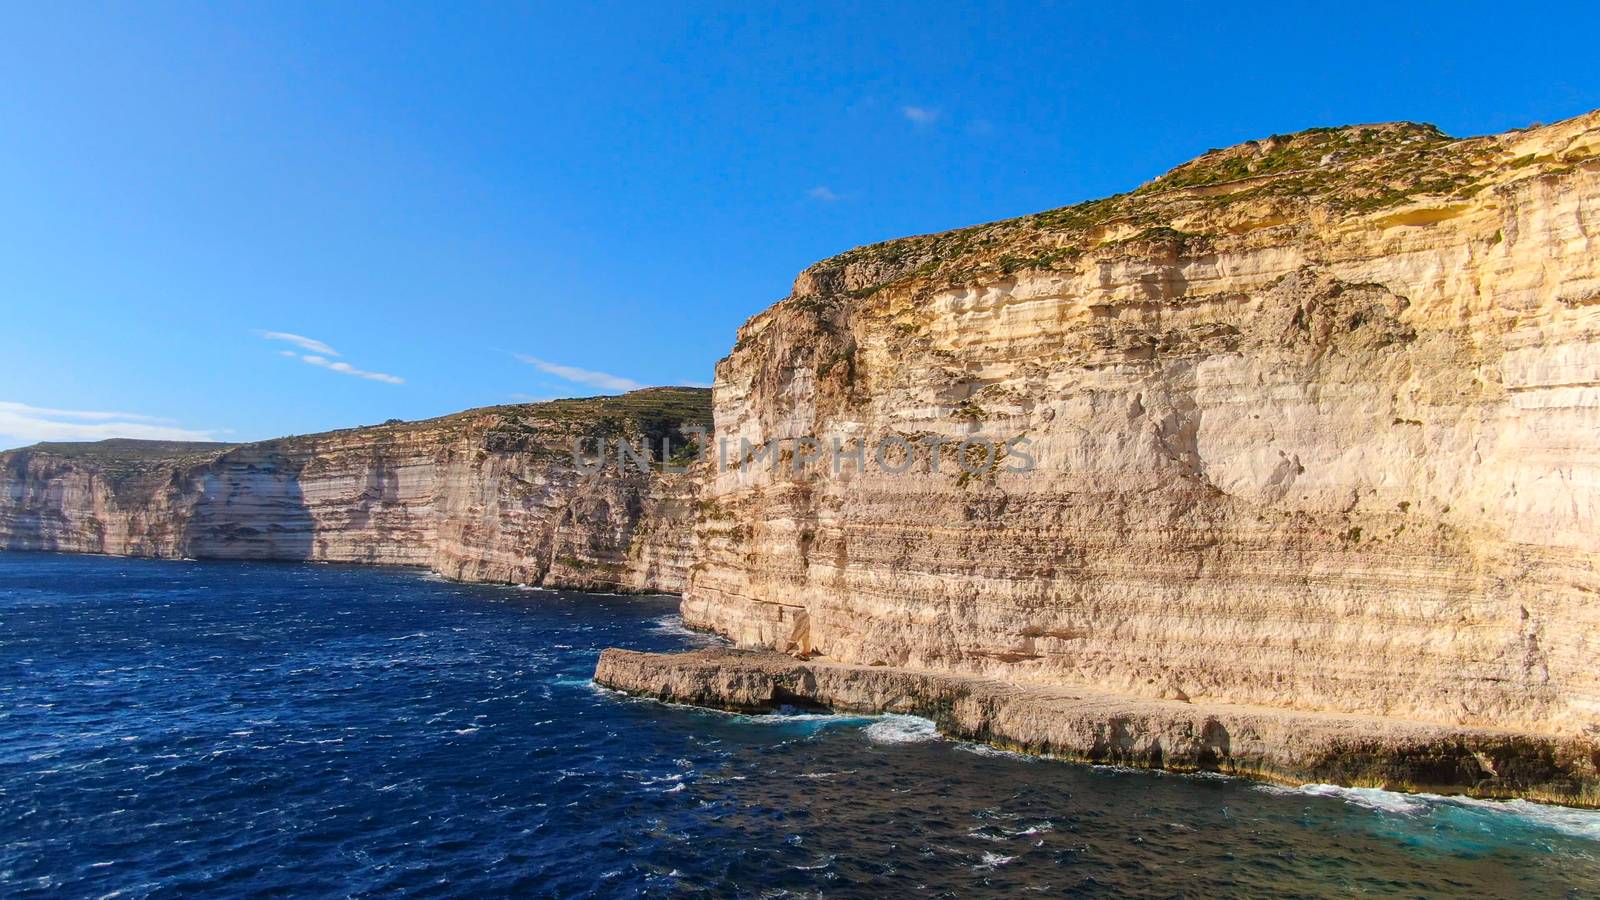 The amazing coast of Gozo - Malta with its steep cliffs by Lattwein